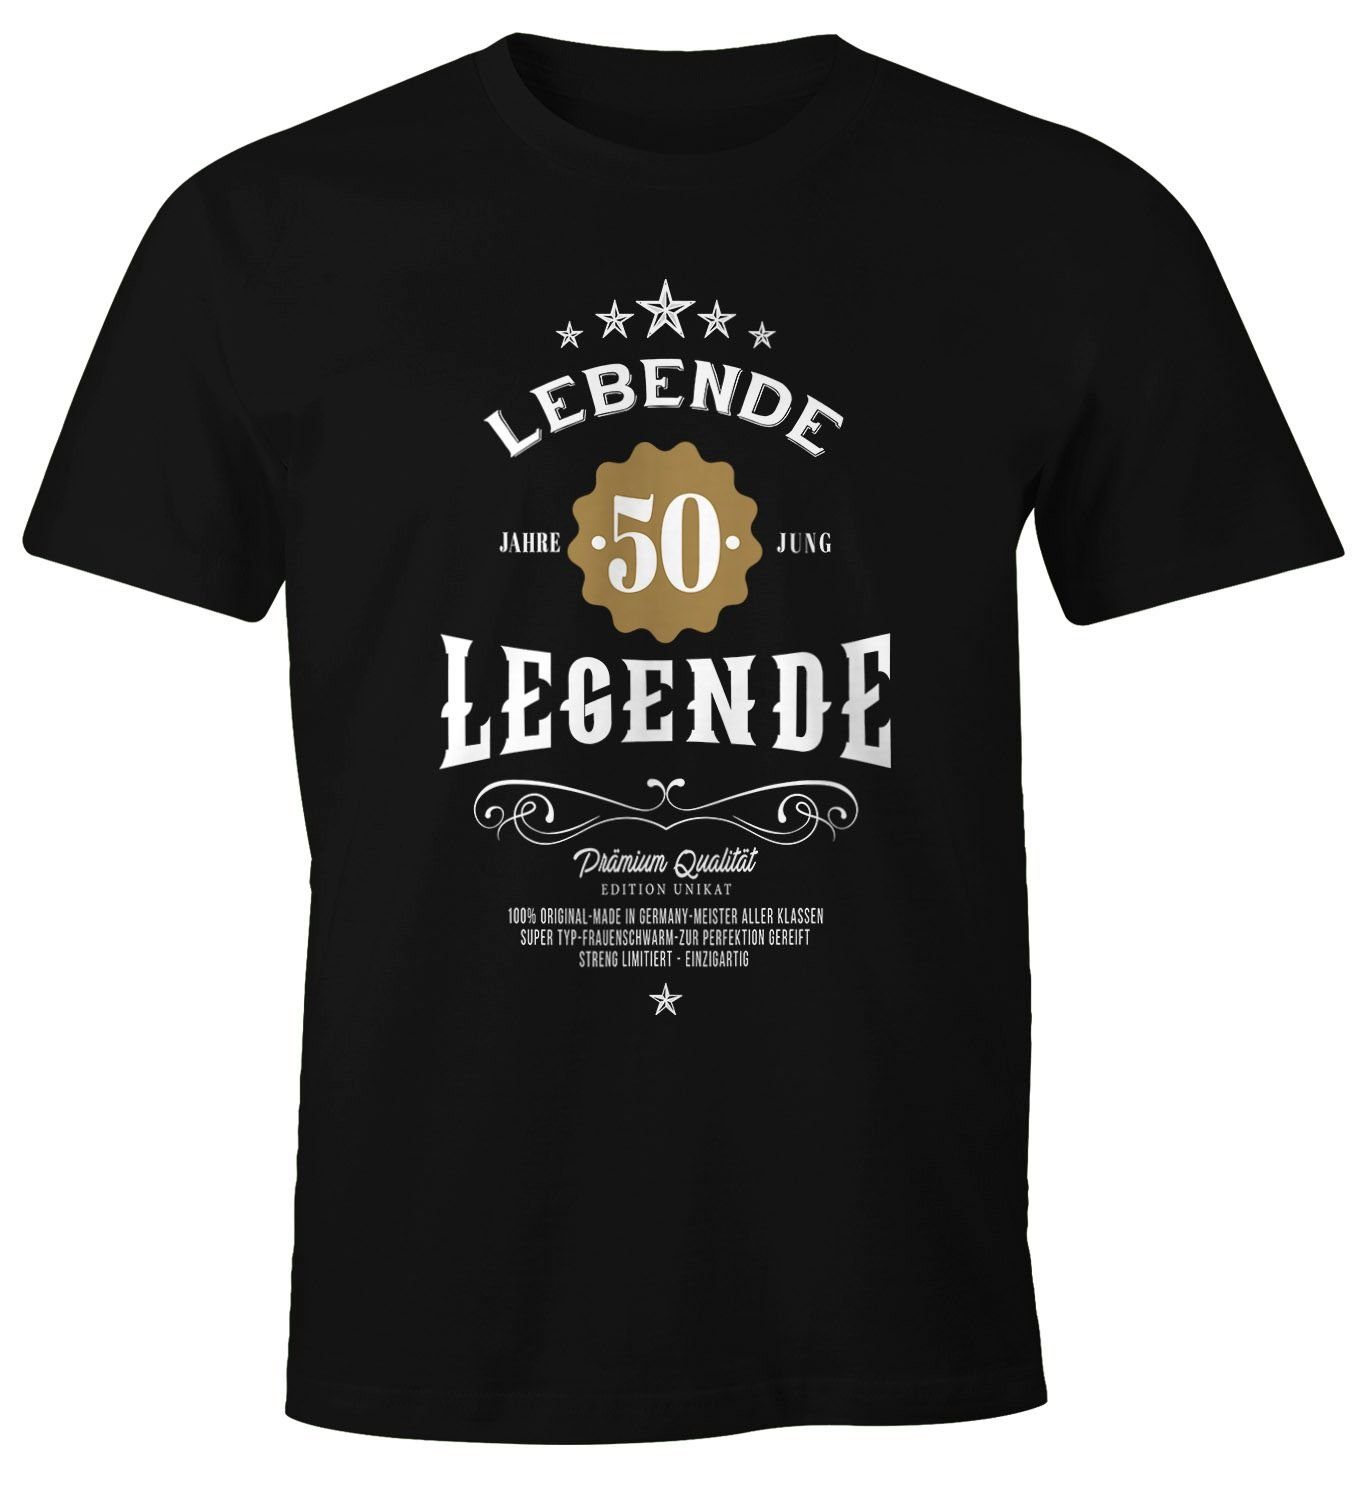 MoonWorks Print-Shirt Herren T-Shirt Geburtstag Geschenk Lebende Legende 30-80 Jahre jung Moonworks® mit Print 50 schwarz